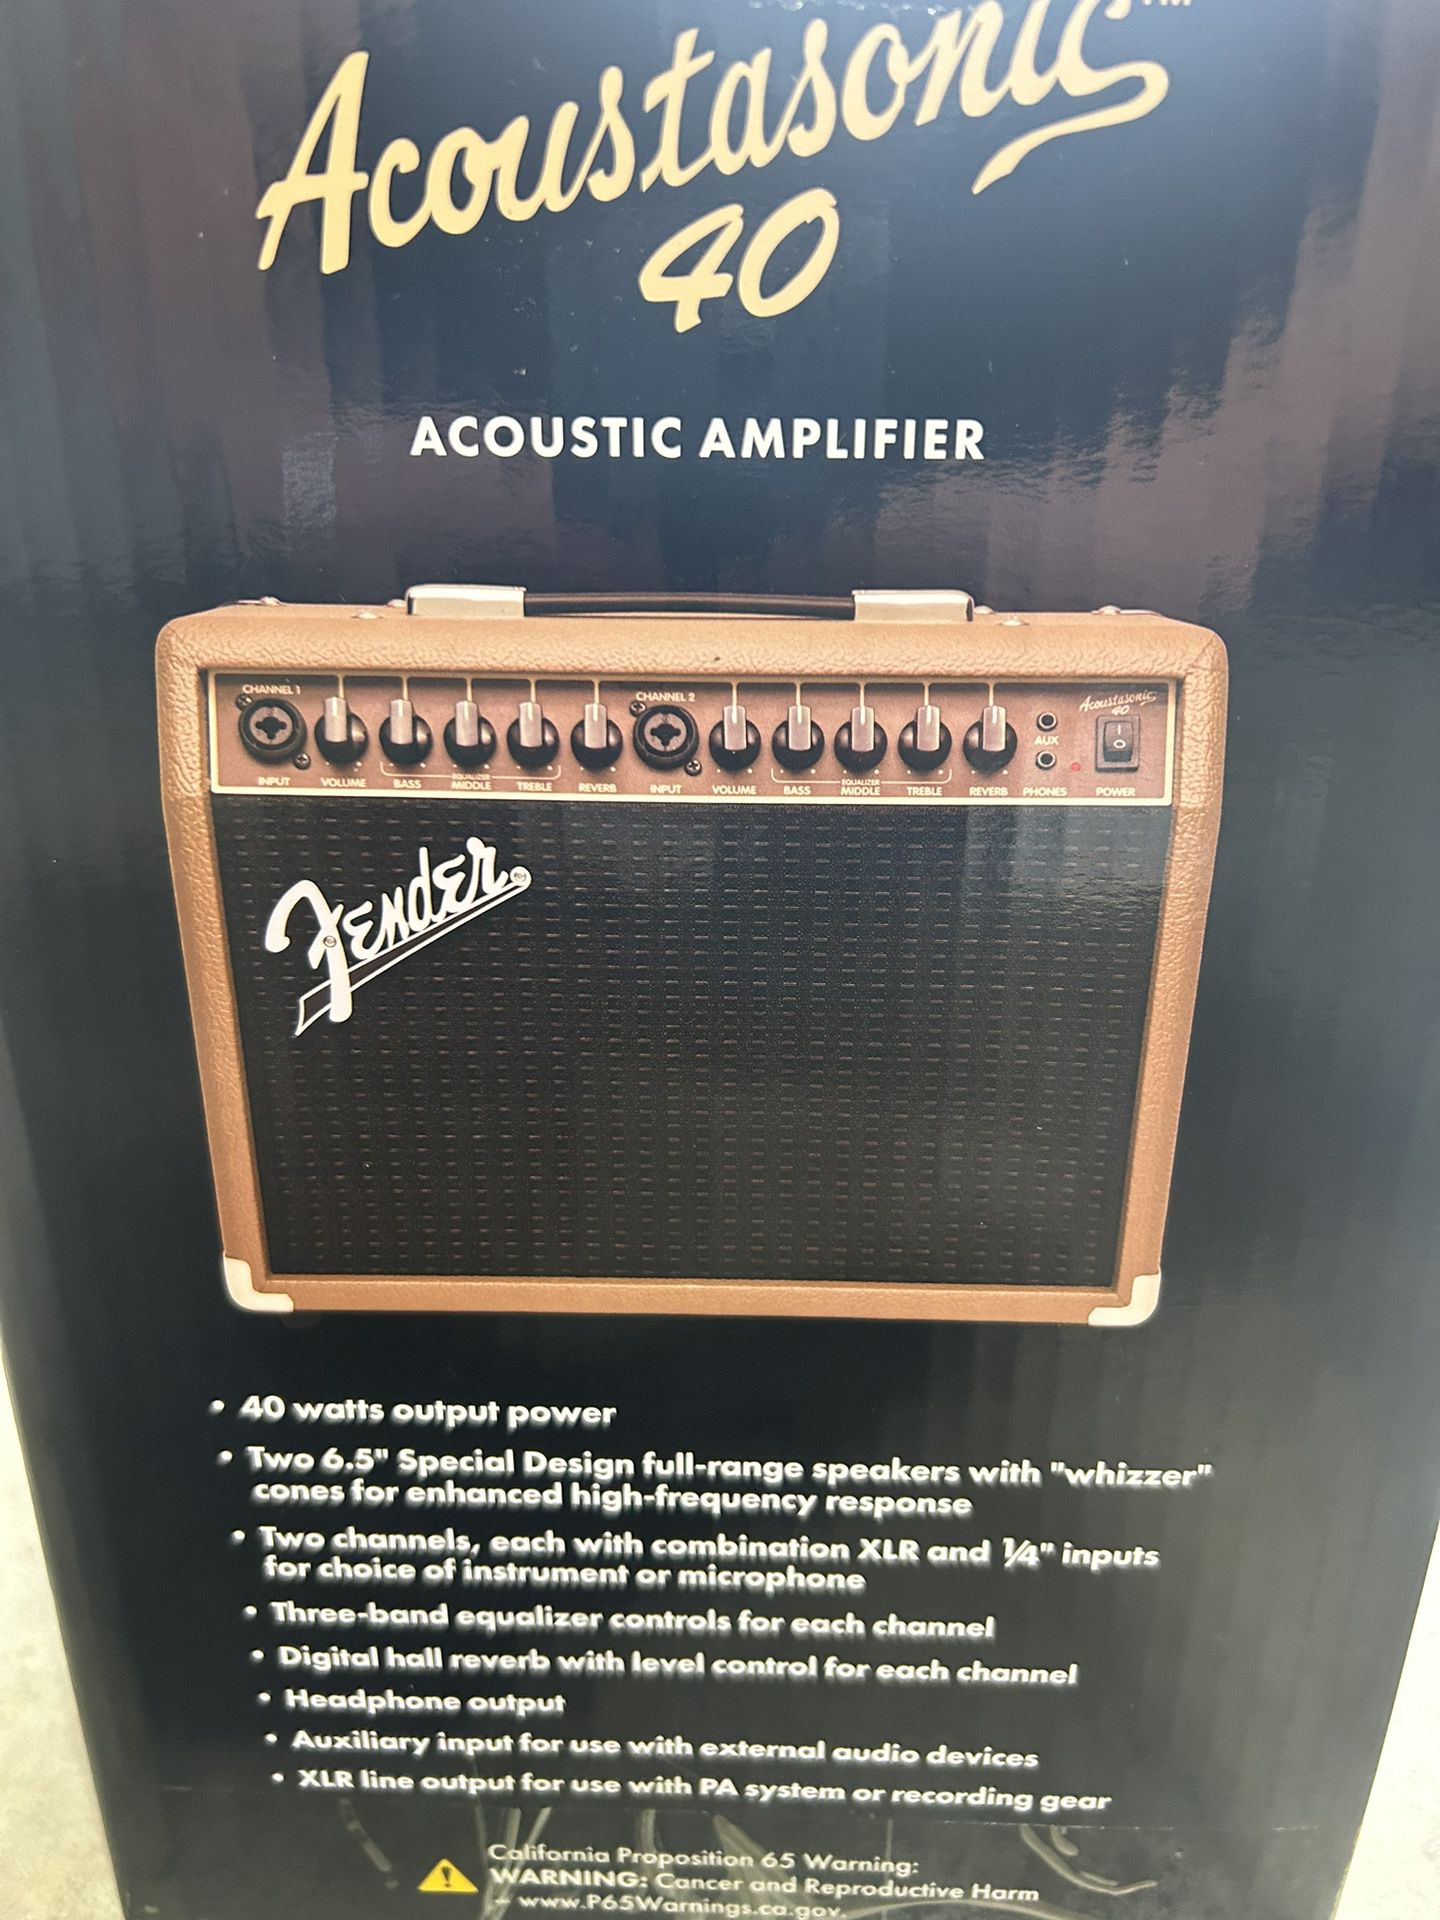 Fender Acoustic Guitar Amp